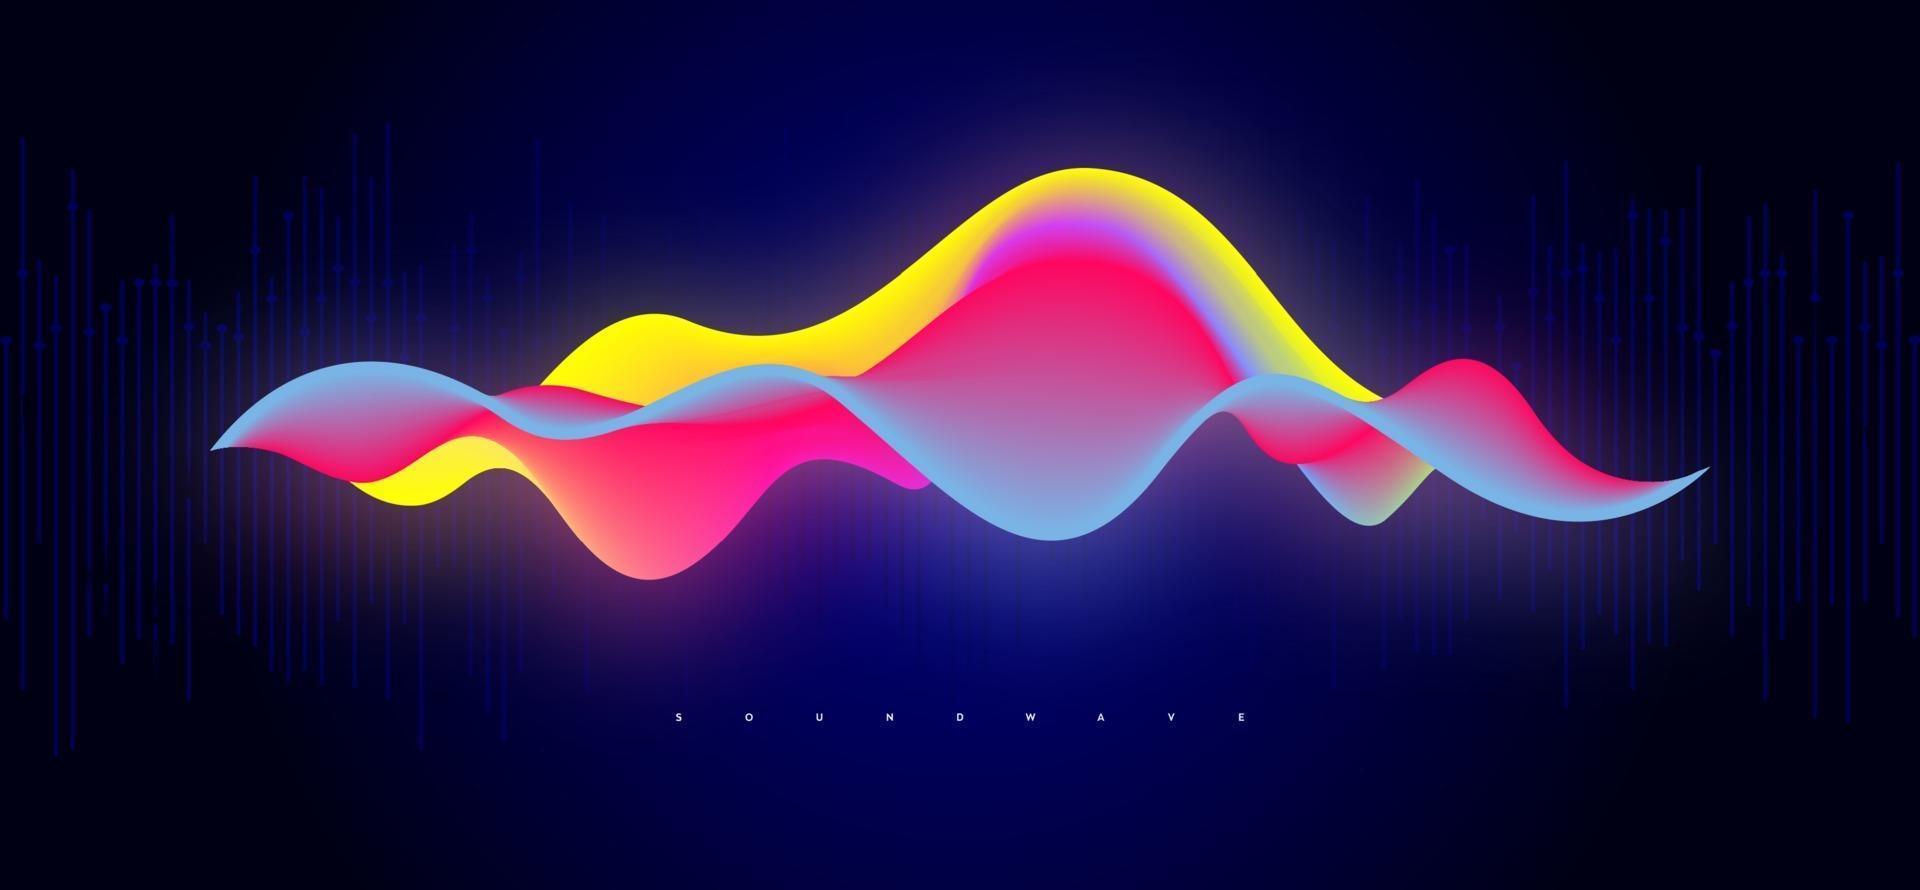 fundo de equalizador digital colorido de onda sonora vetor